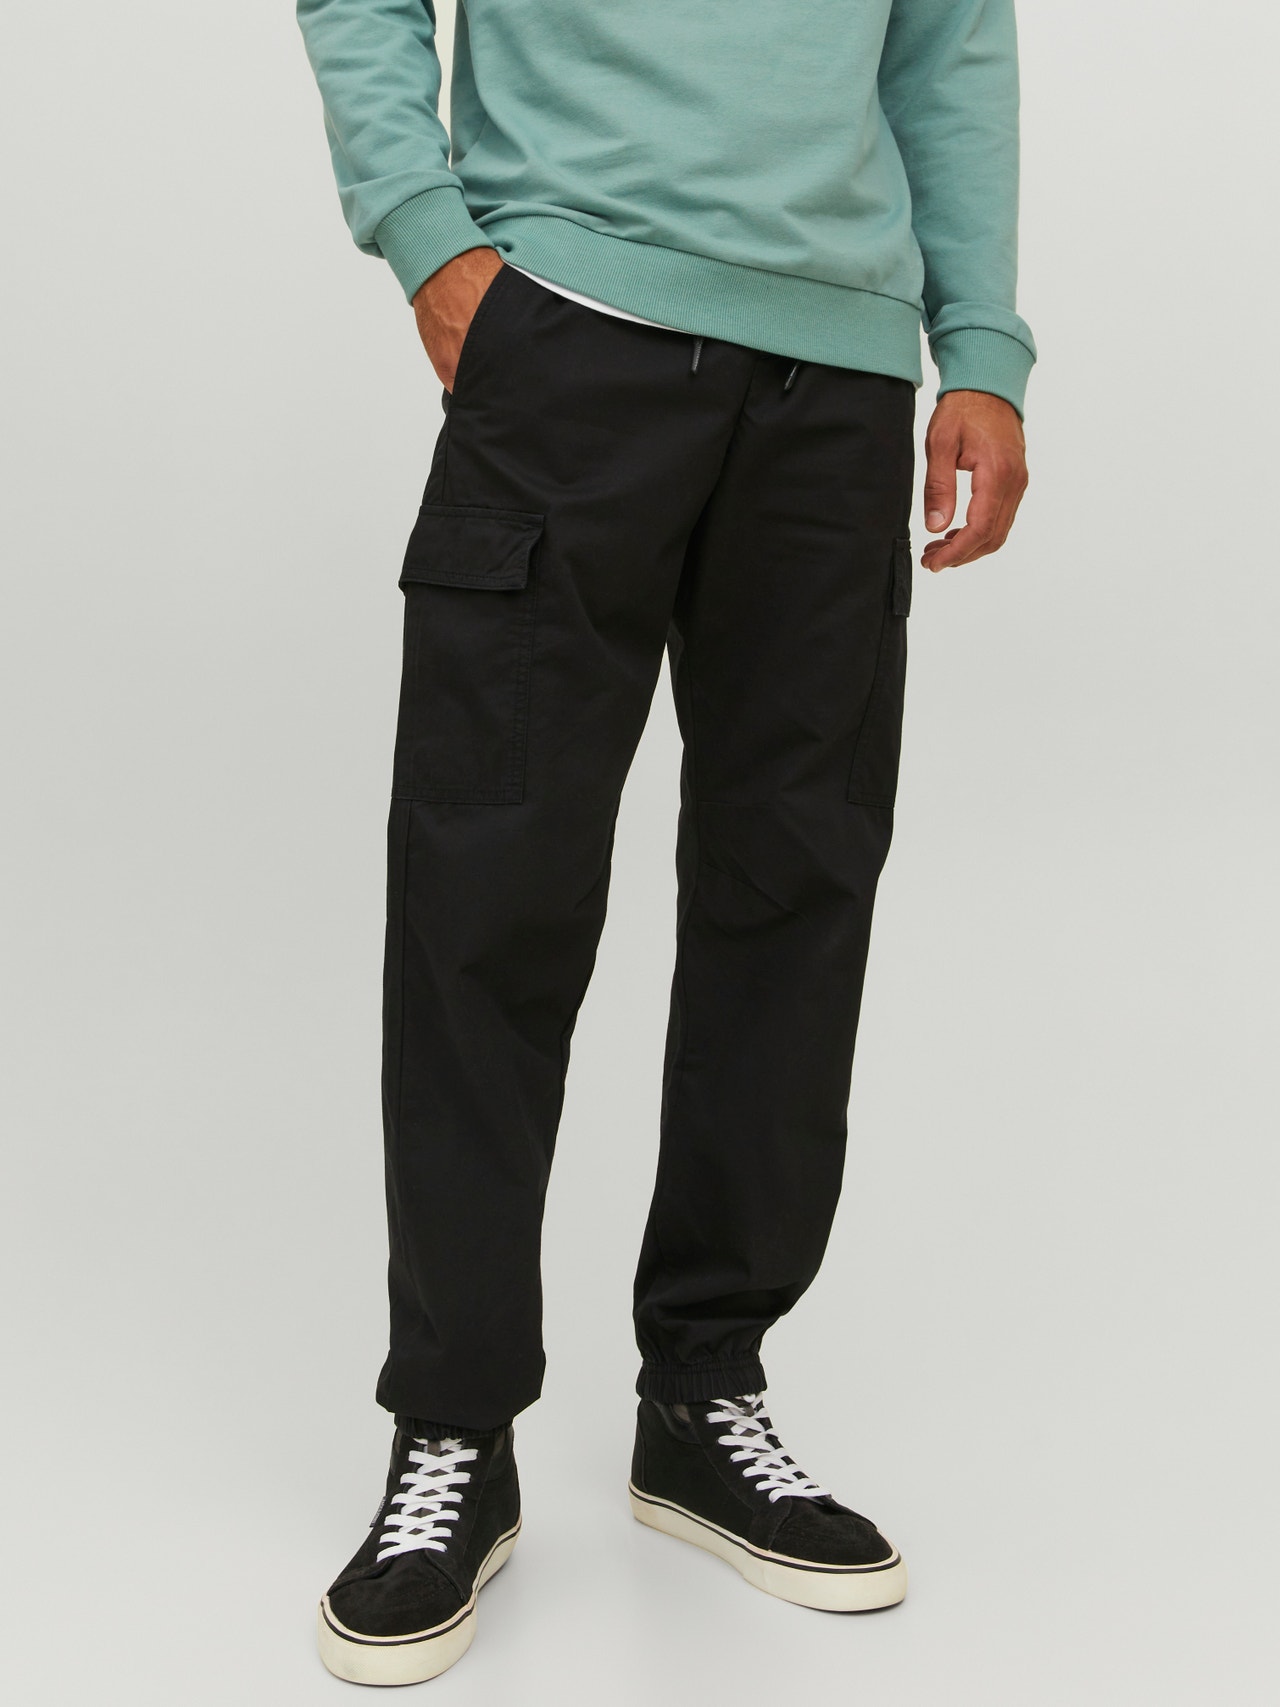 Regular Fit Ripstop cargo trousers - Khaki green - Men